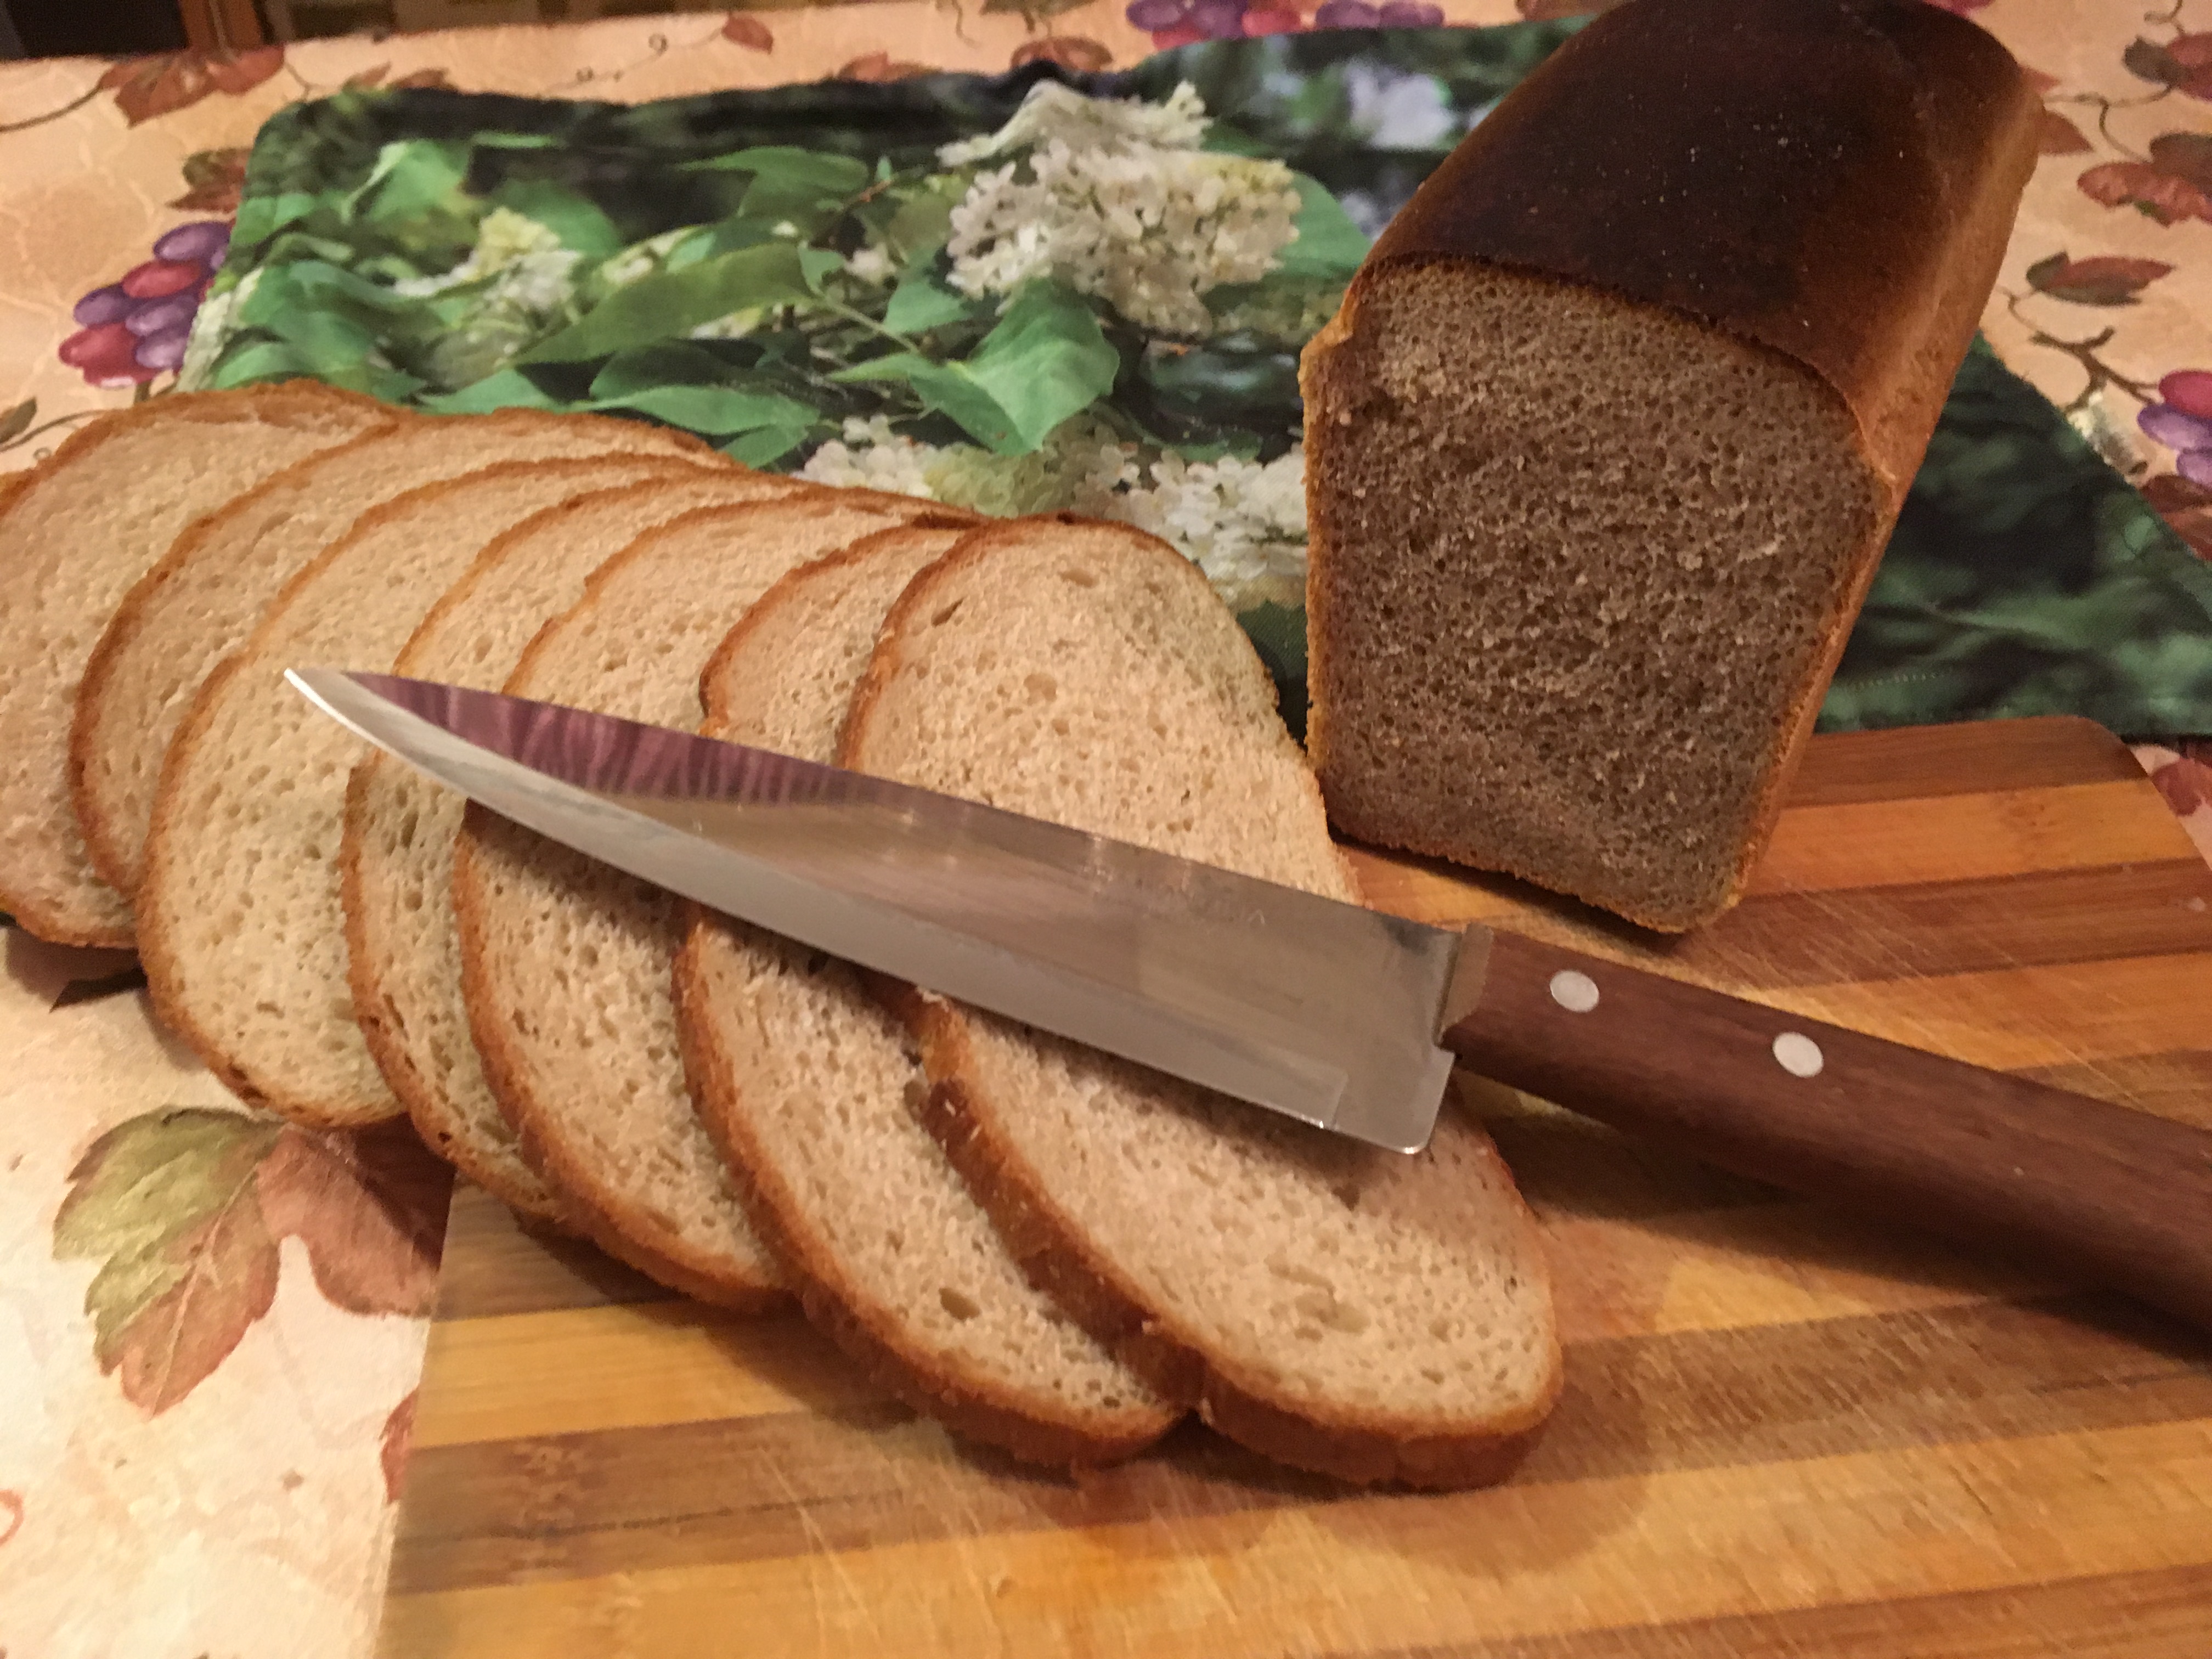 фото из статьи про хлеб...